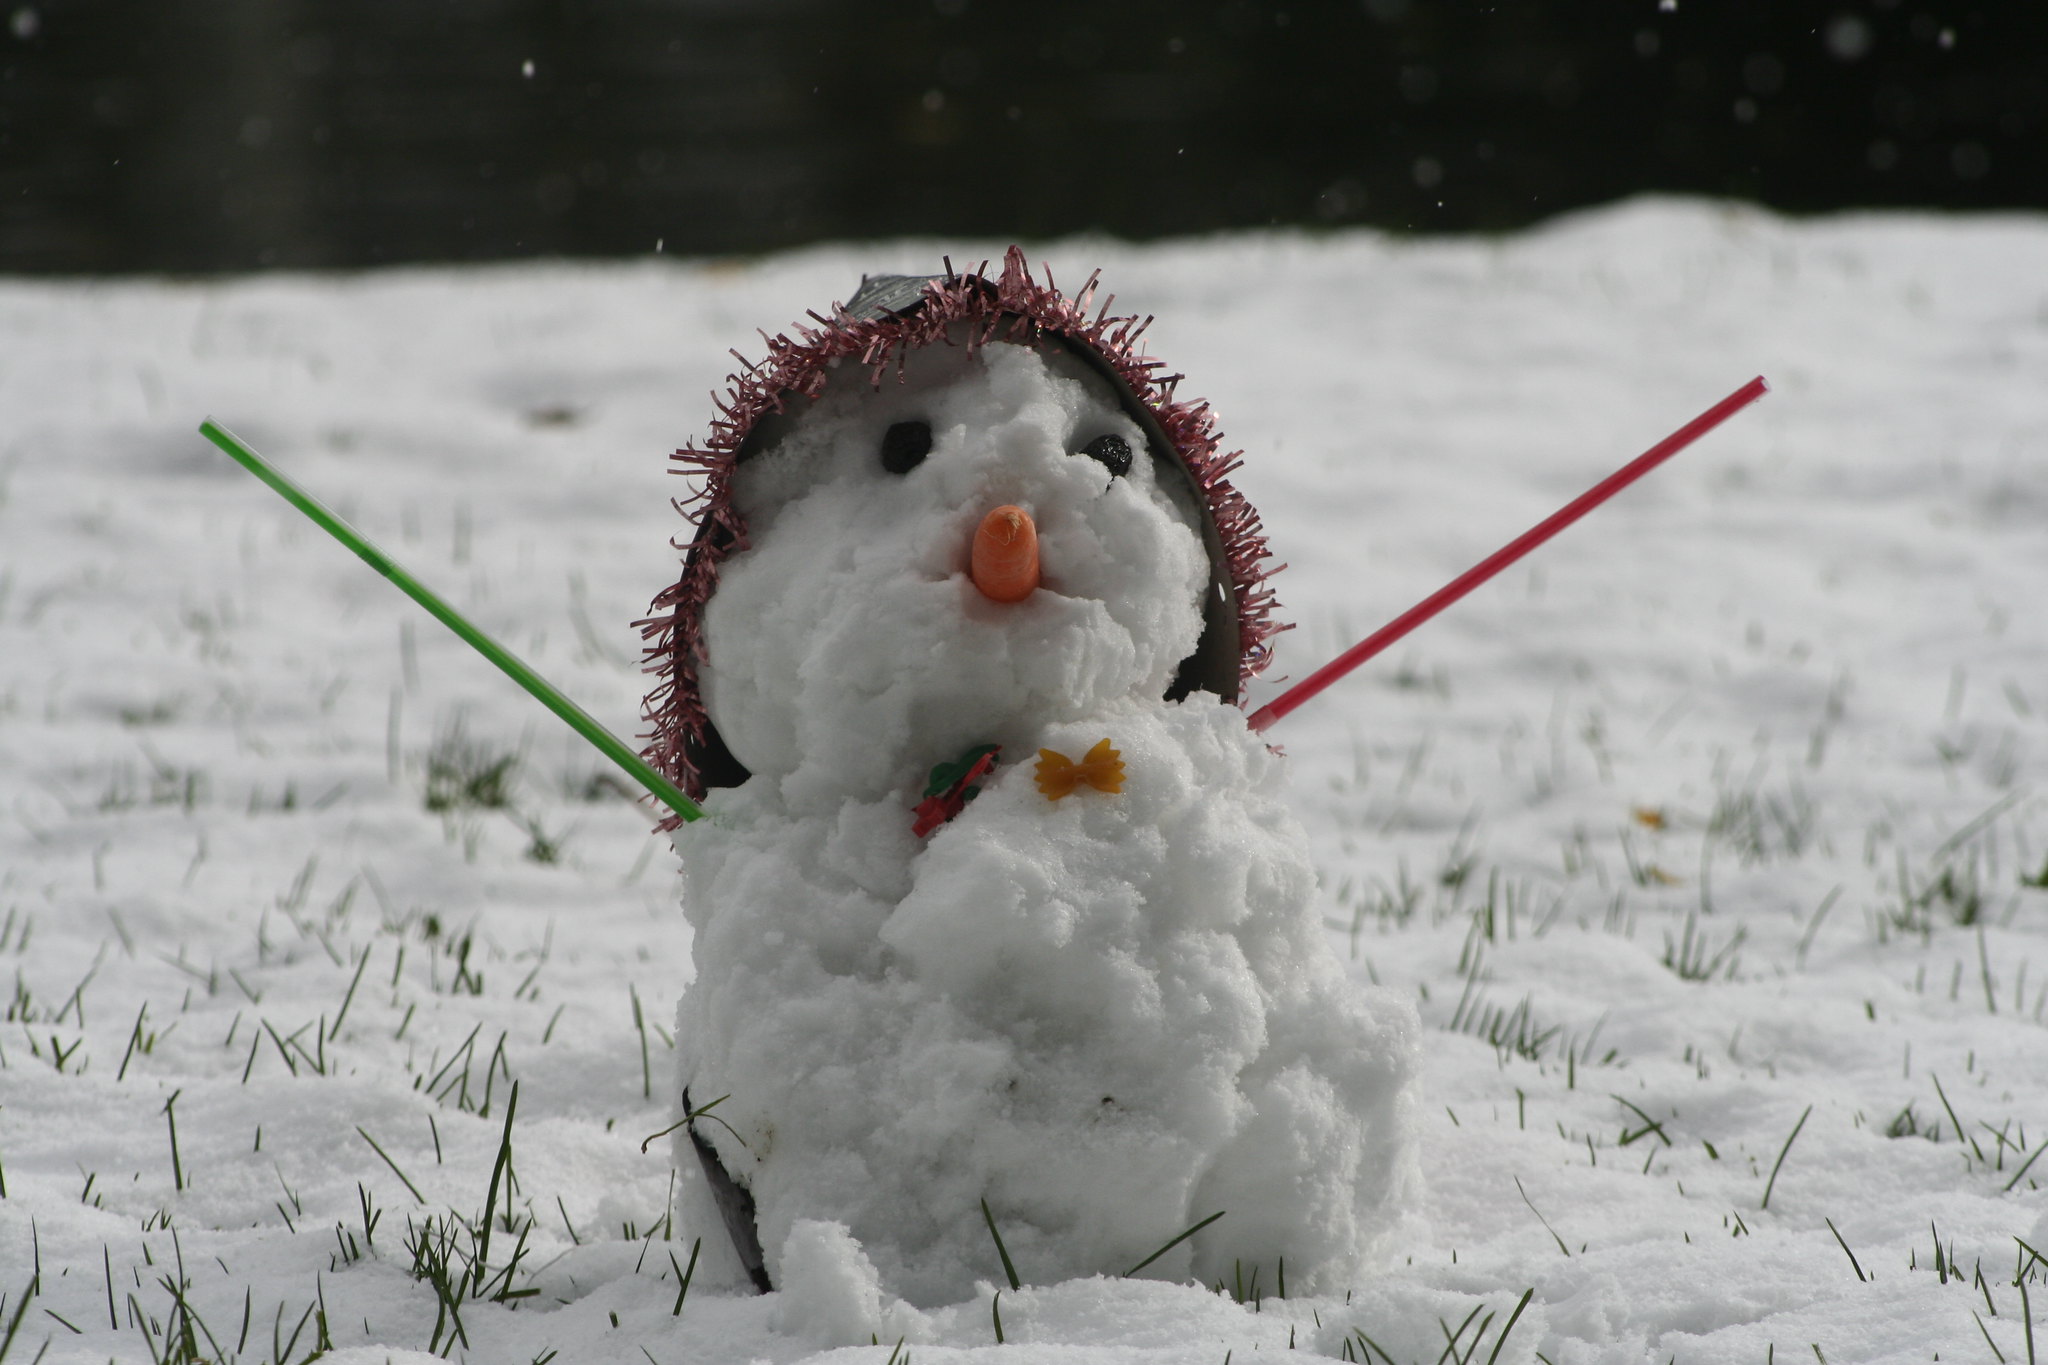 Our snowman!